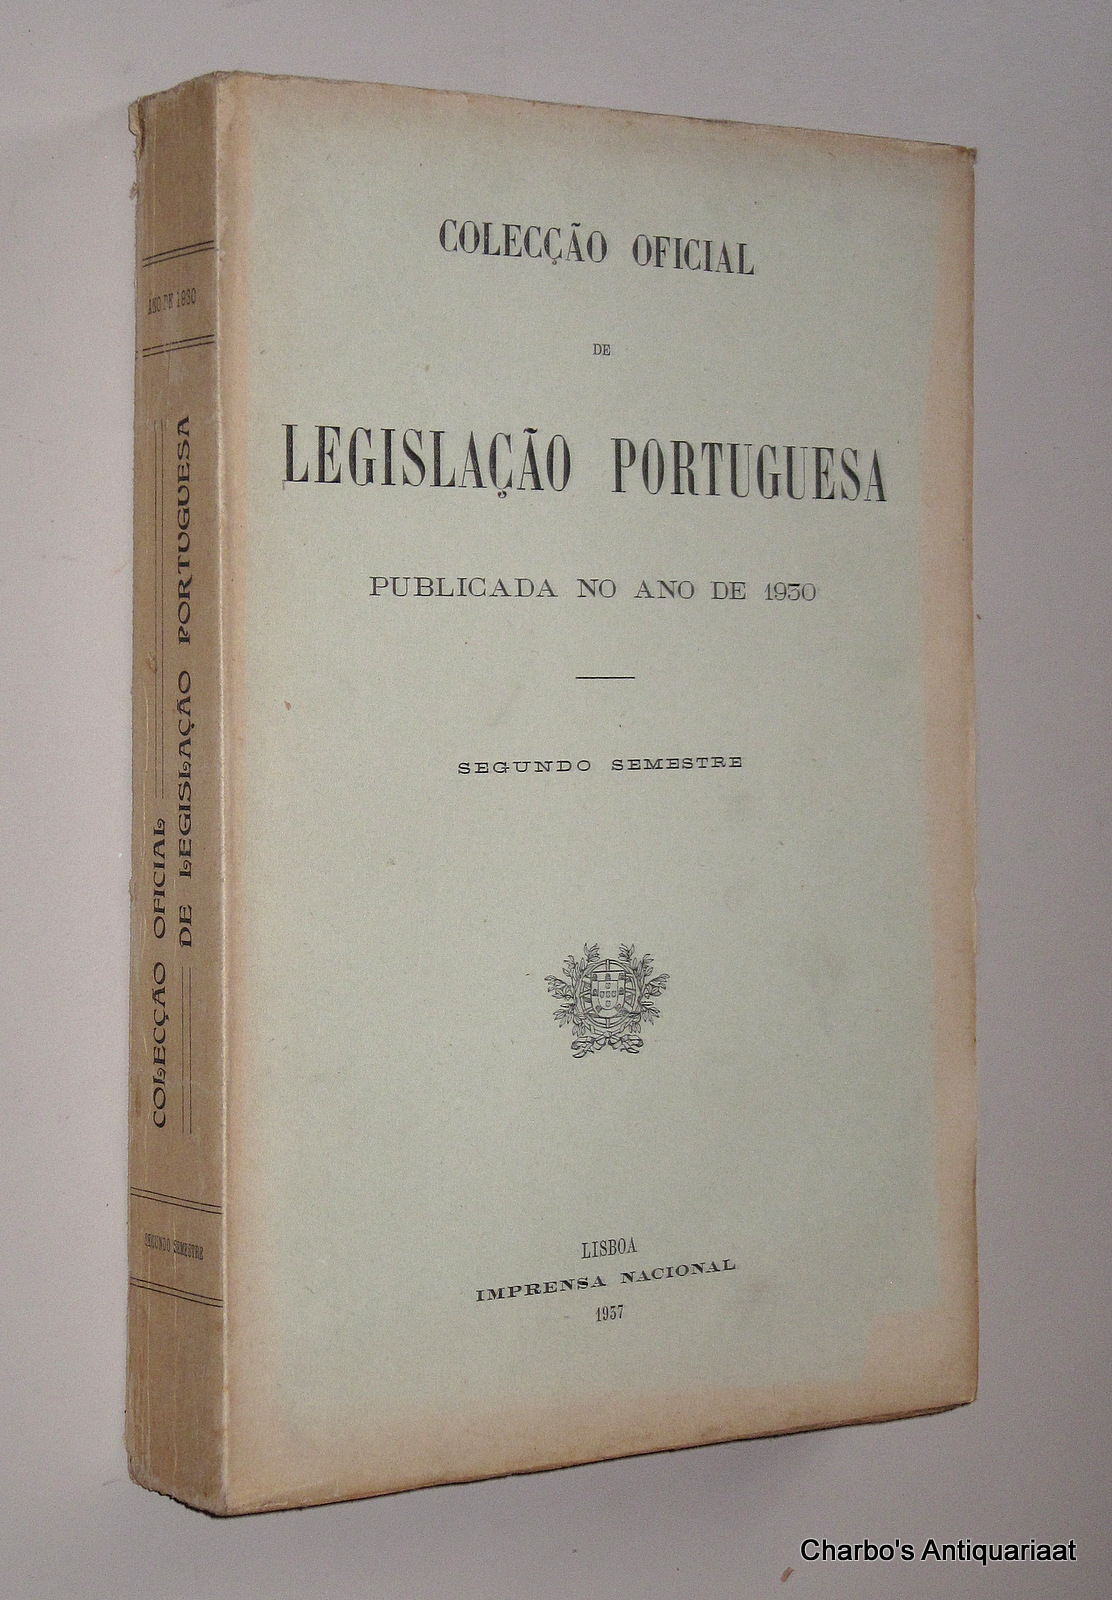 N/A, -  Coleco oficial de legislao portuguesa, publicada no ano de 1930, Segundo semestre.